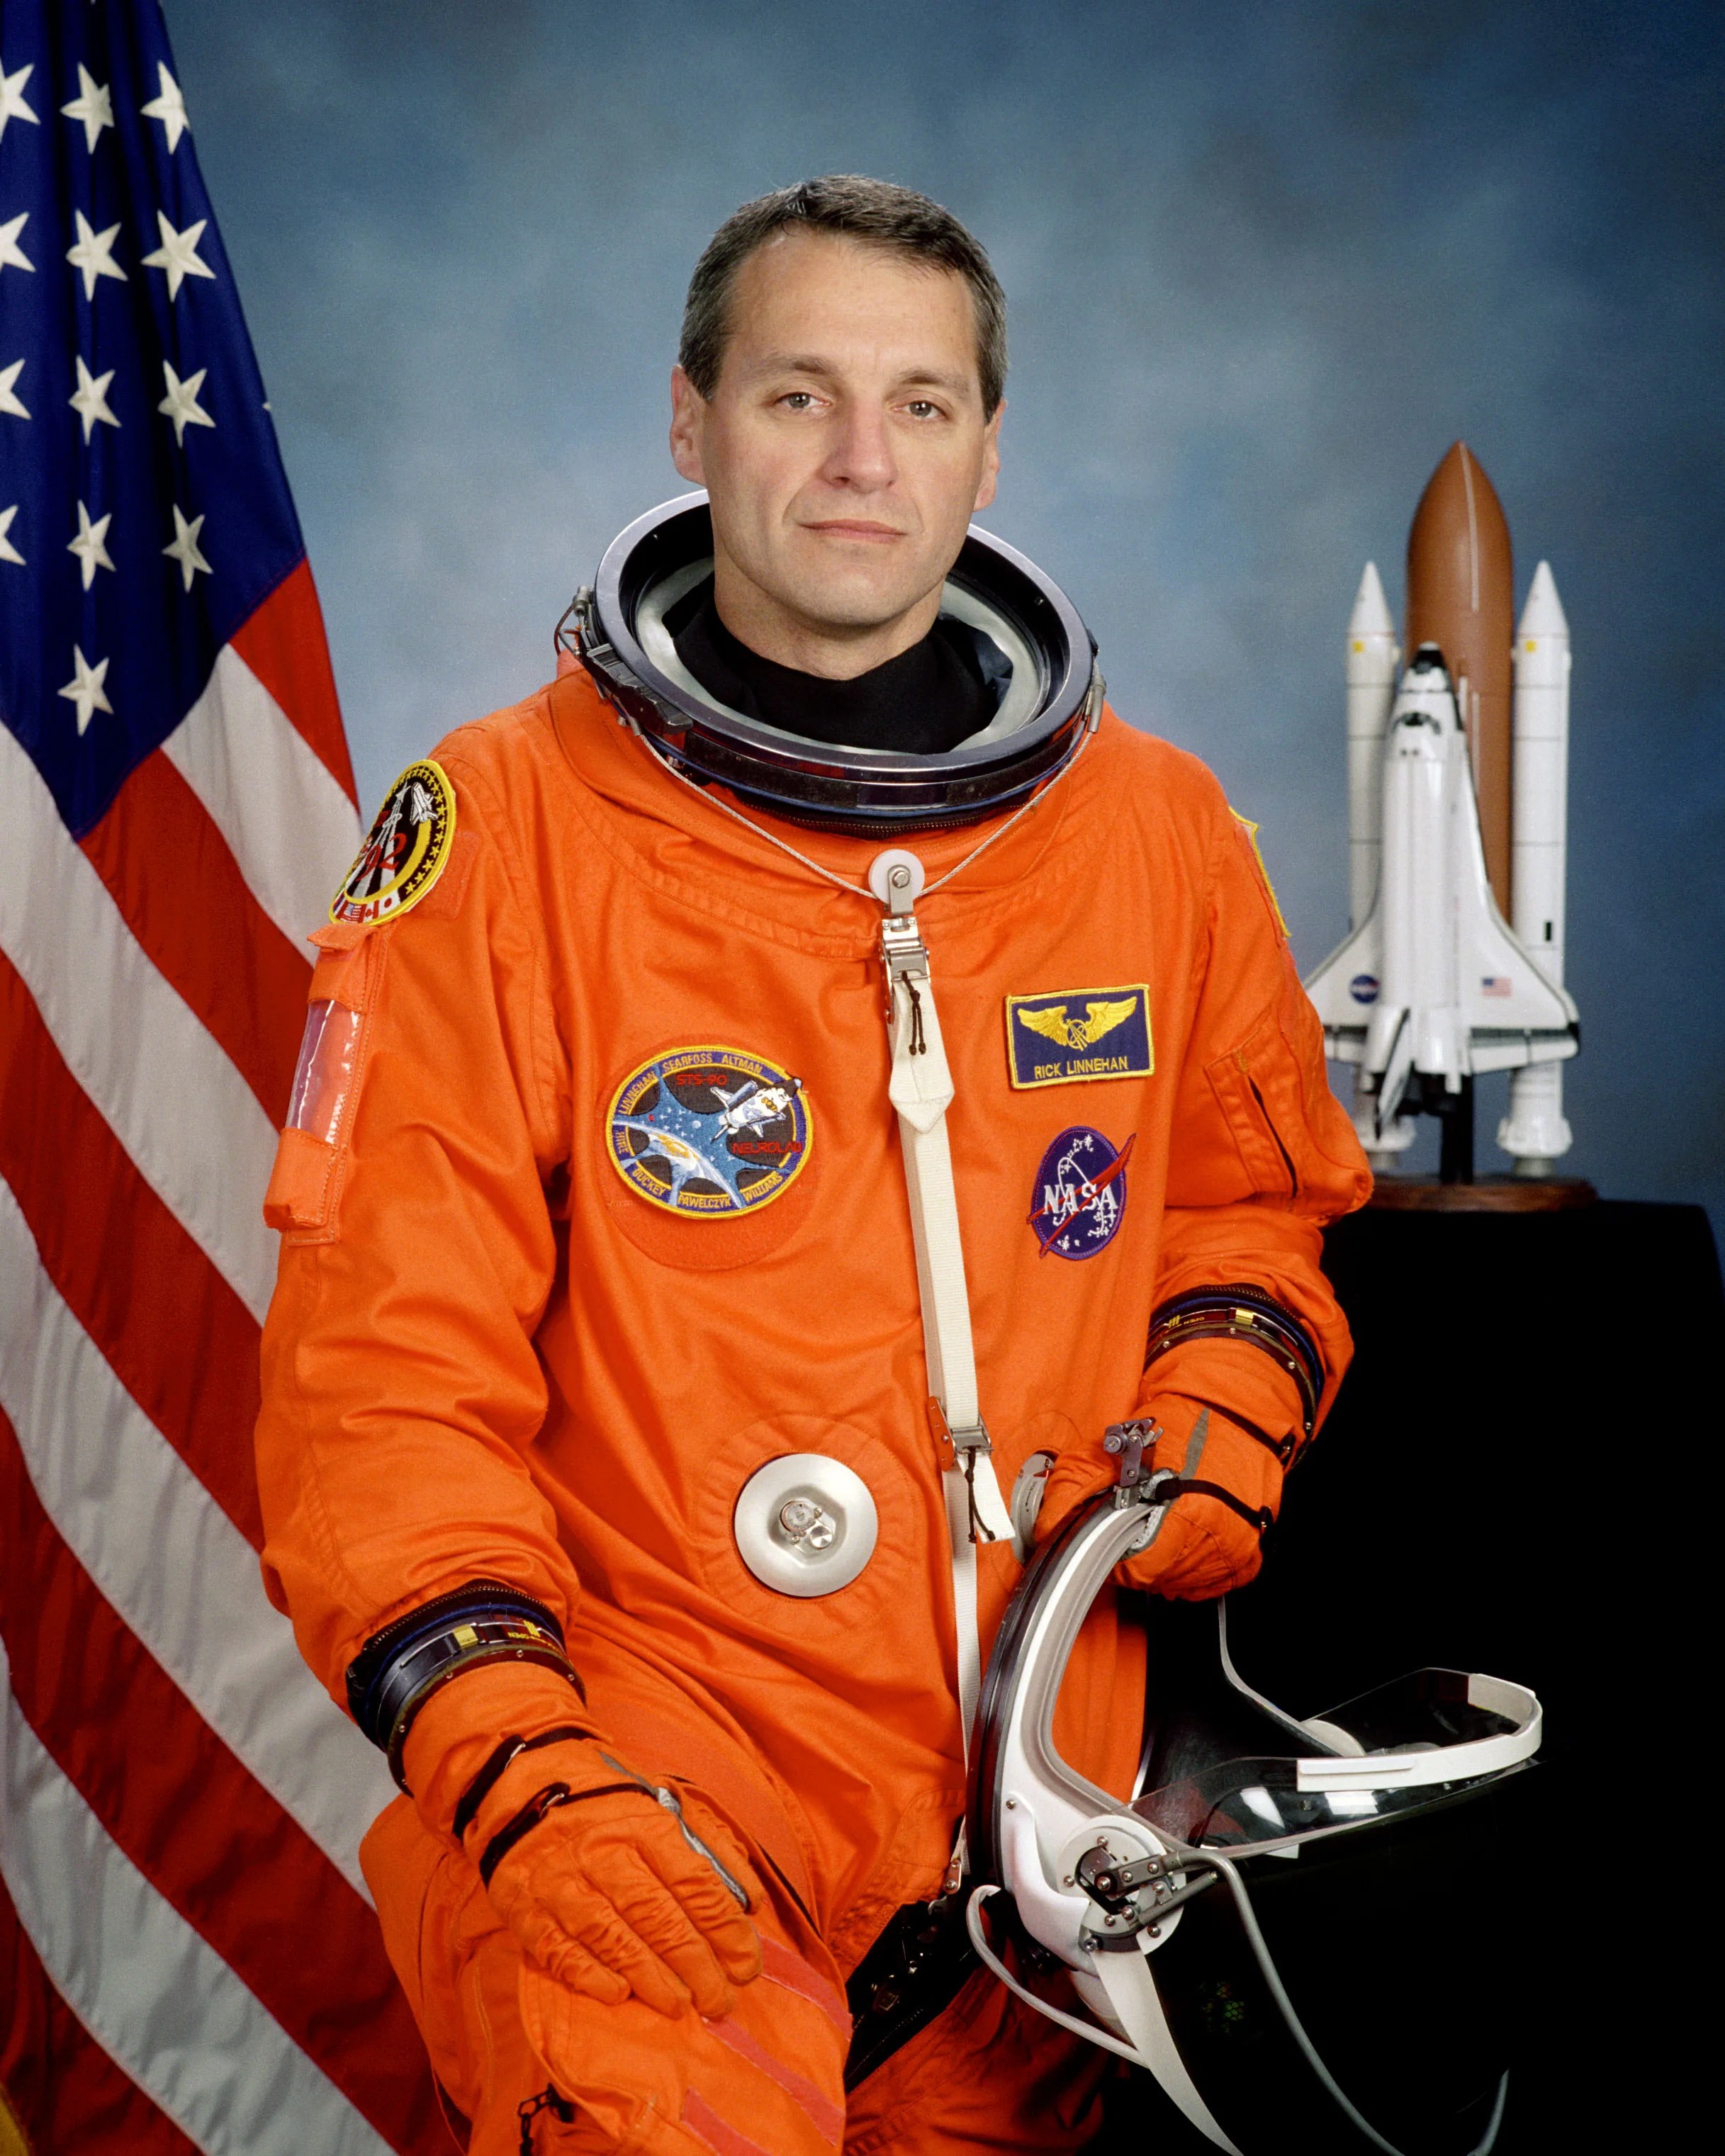 Official astronaut portrait of Richard Linnehan.